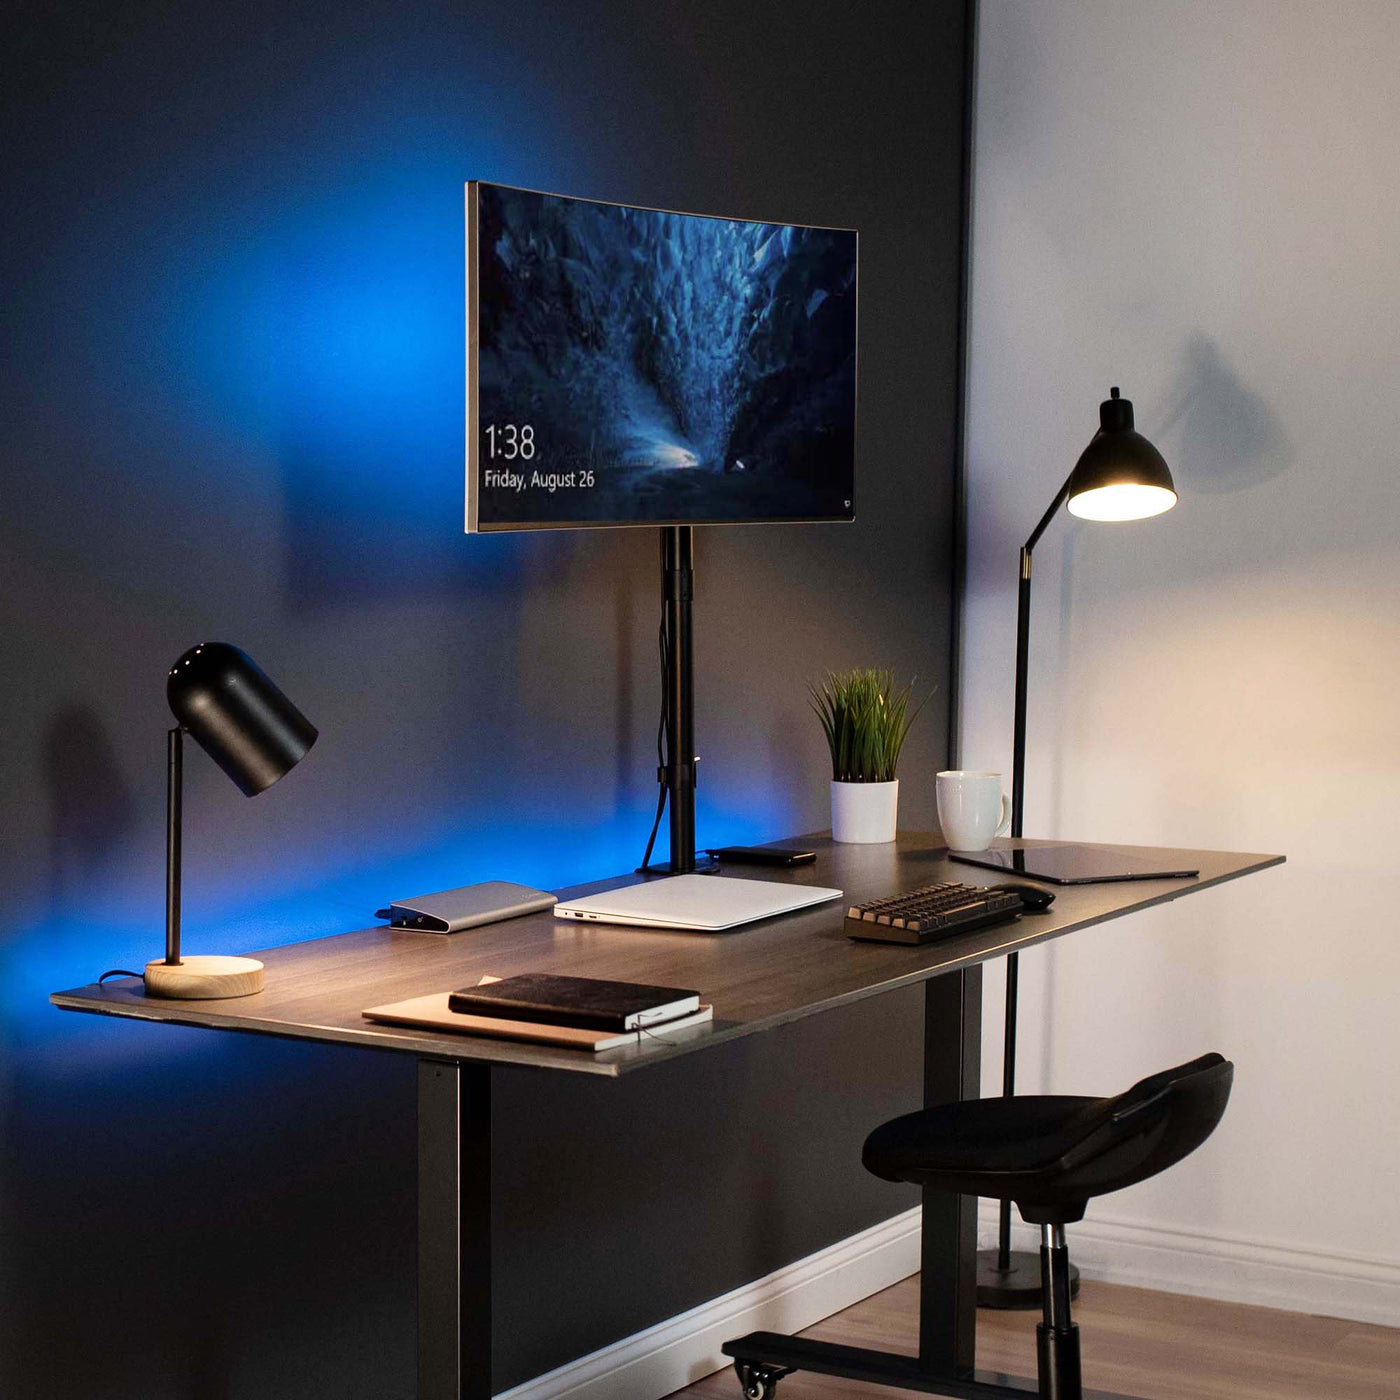 Extra tall sturdy adjustable single monitor ergonomic desk mount for office workstation.